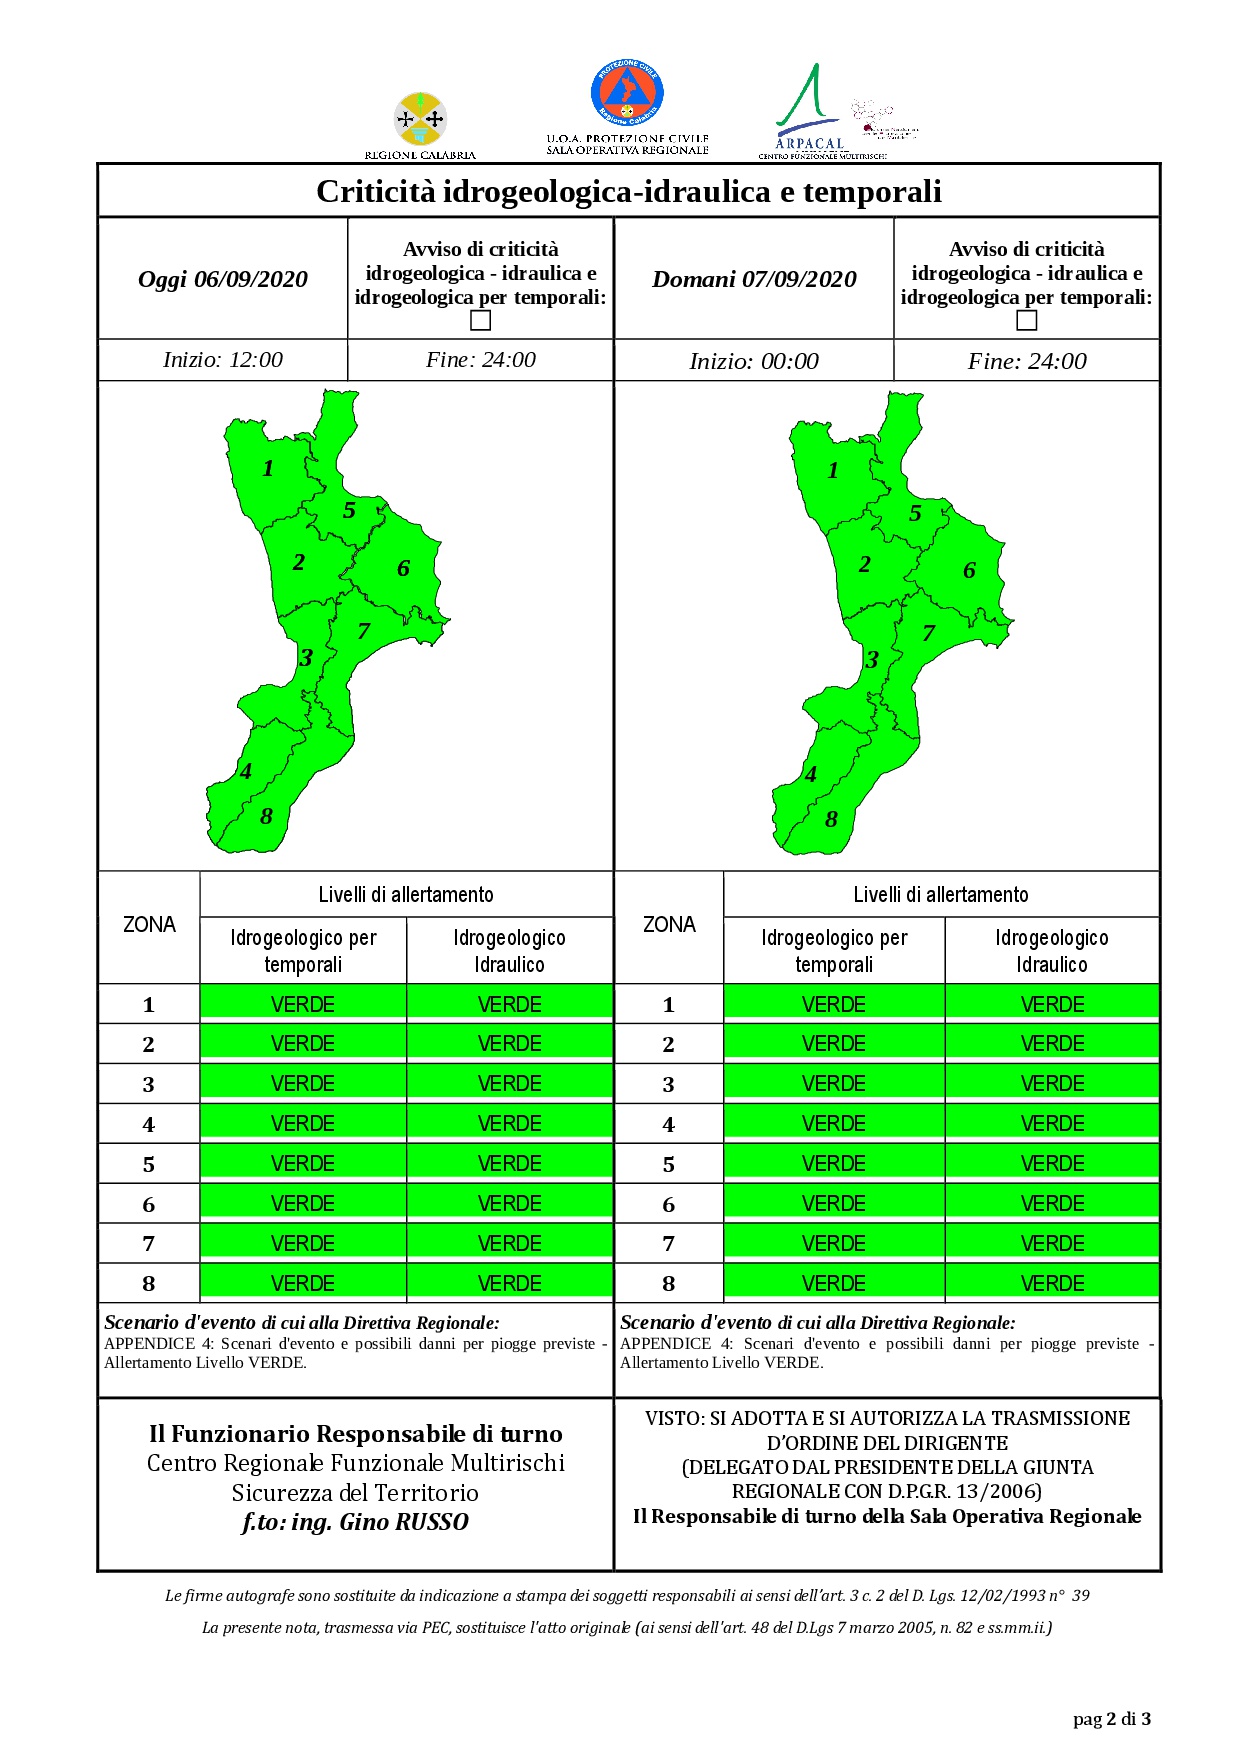 Criticità idrogeologica-idraulica e temporali in Calabria 06-09-2020